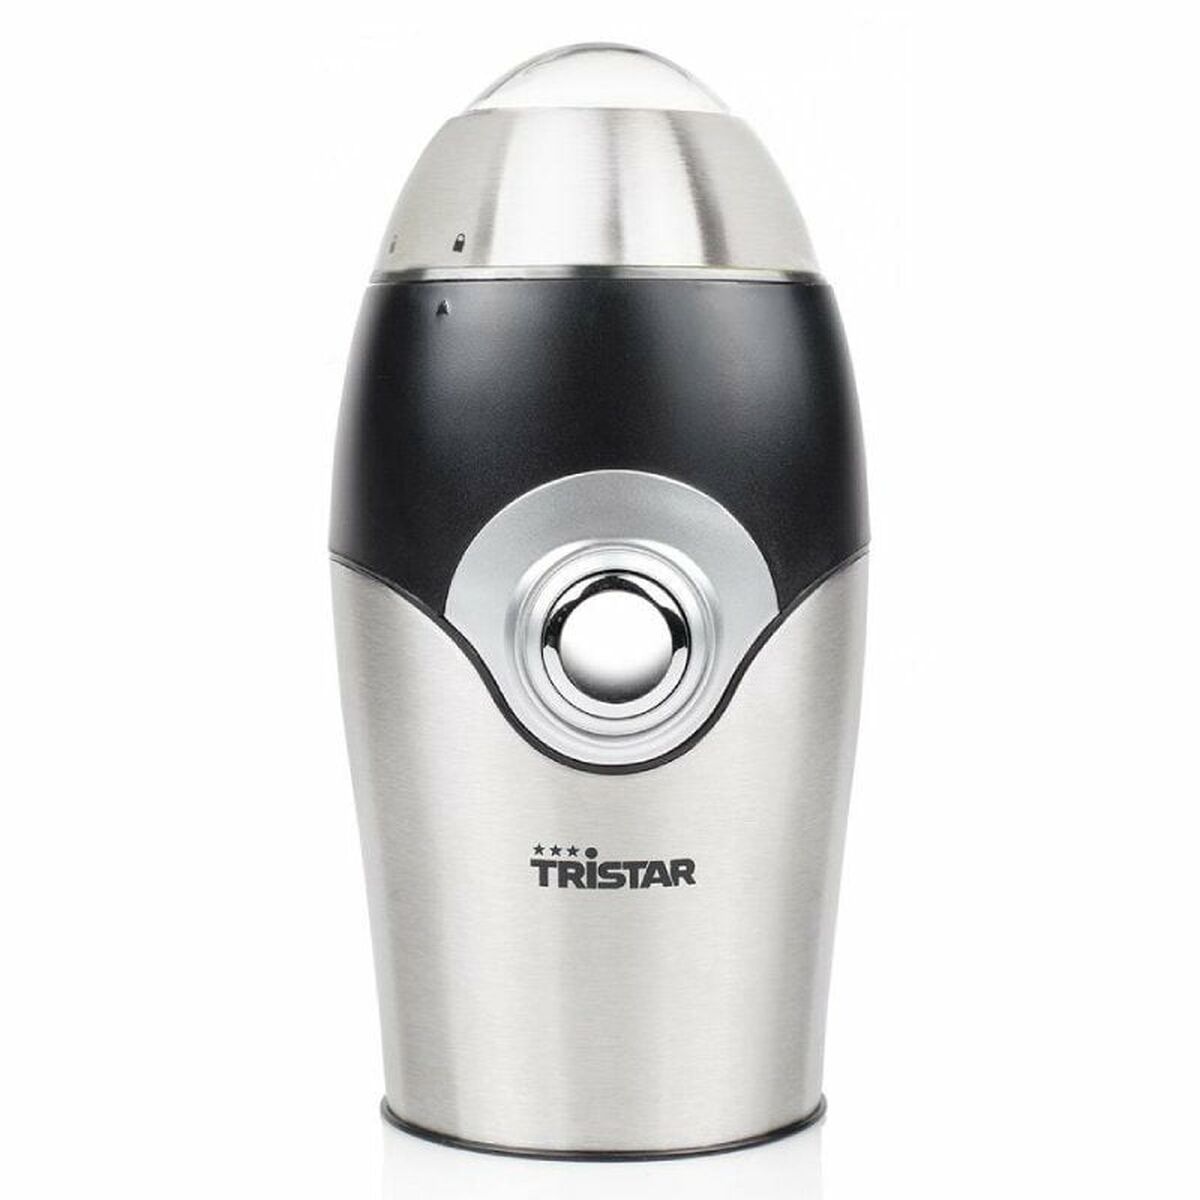 Kaffeemaschine Tristar KM-2270 Weiß Schwarz Silberfarben 150 W - CA International 